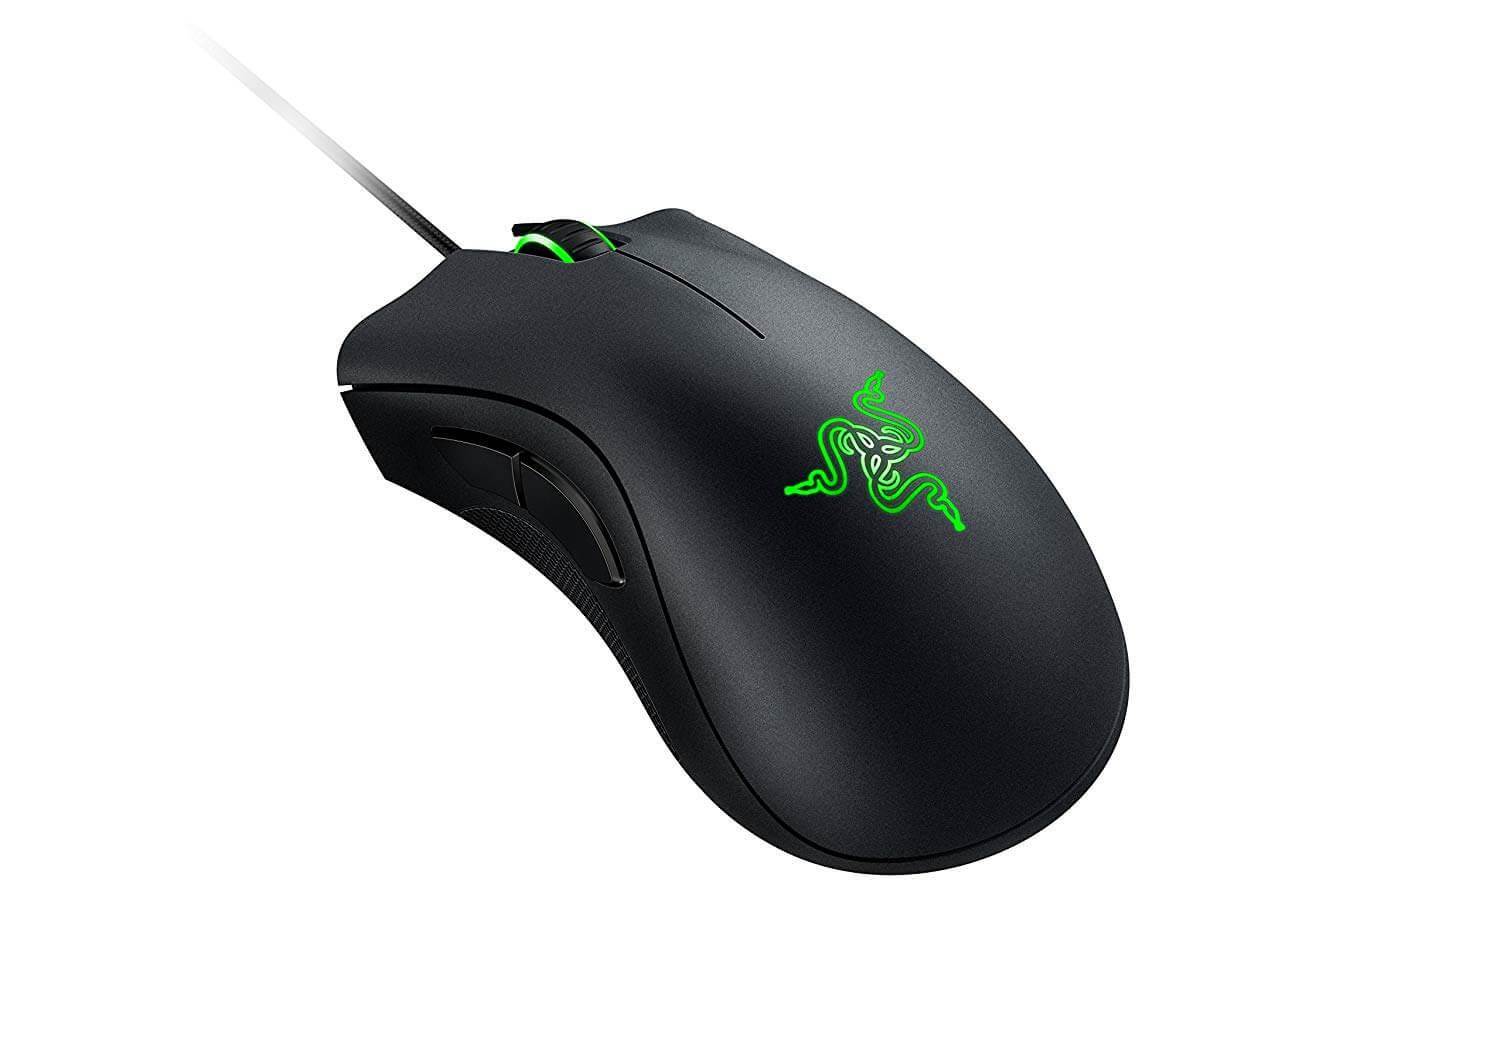 Razer DeathAdder Chroma - Multi-Color Ergonomic Gaming Mouse